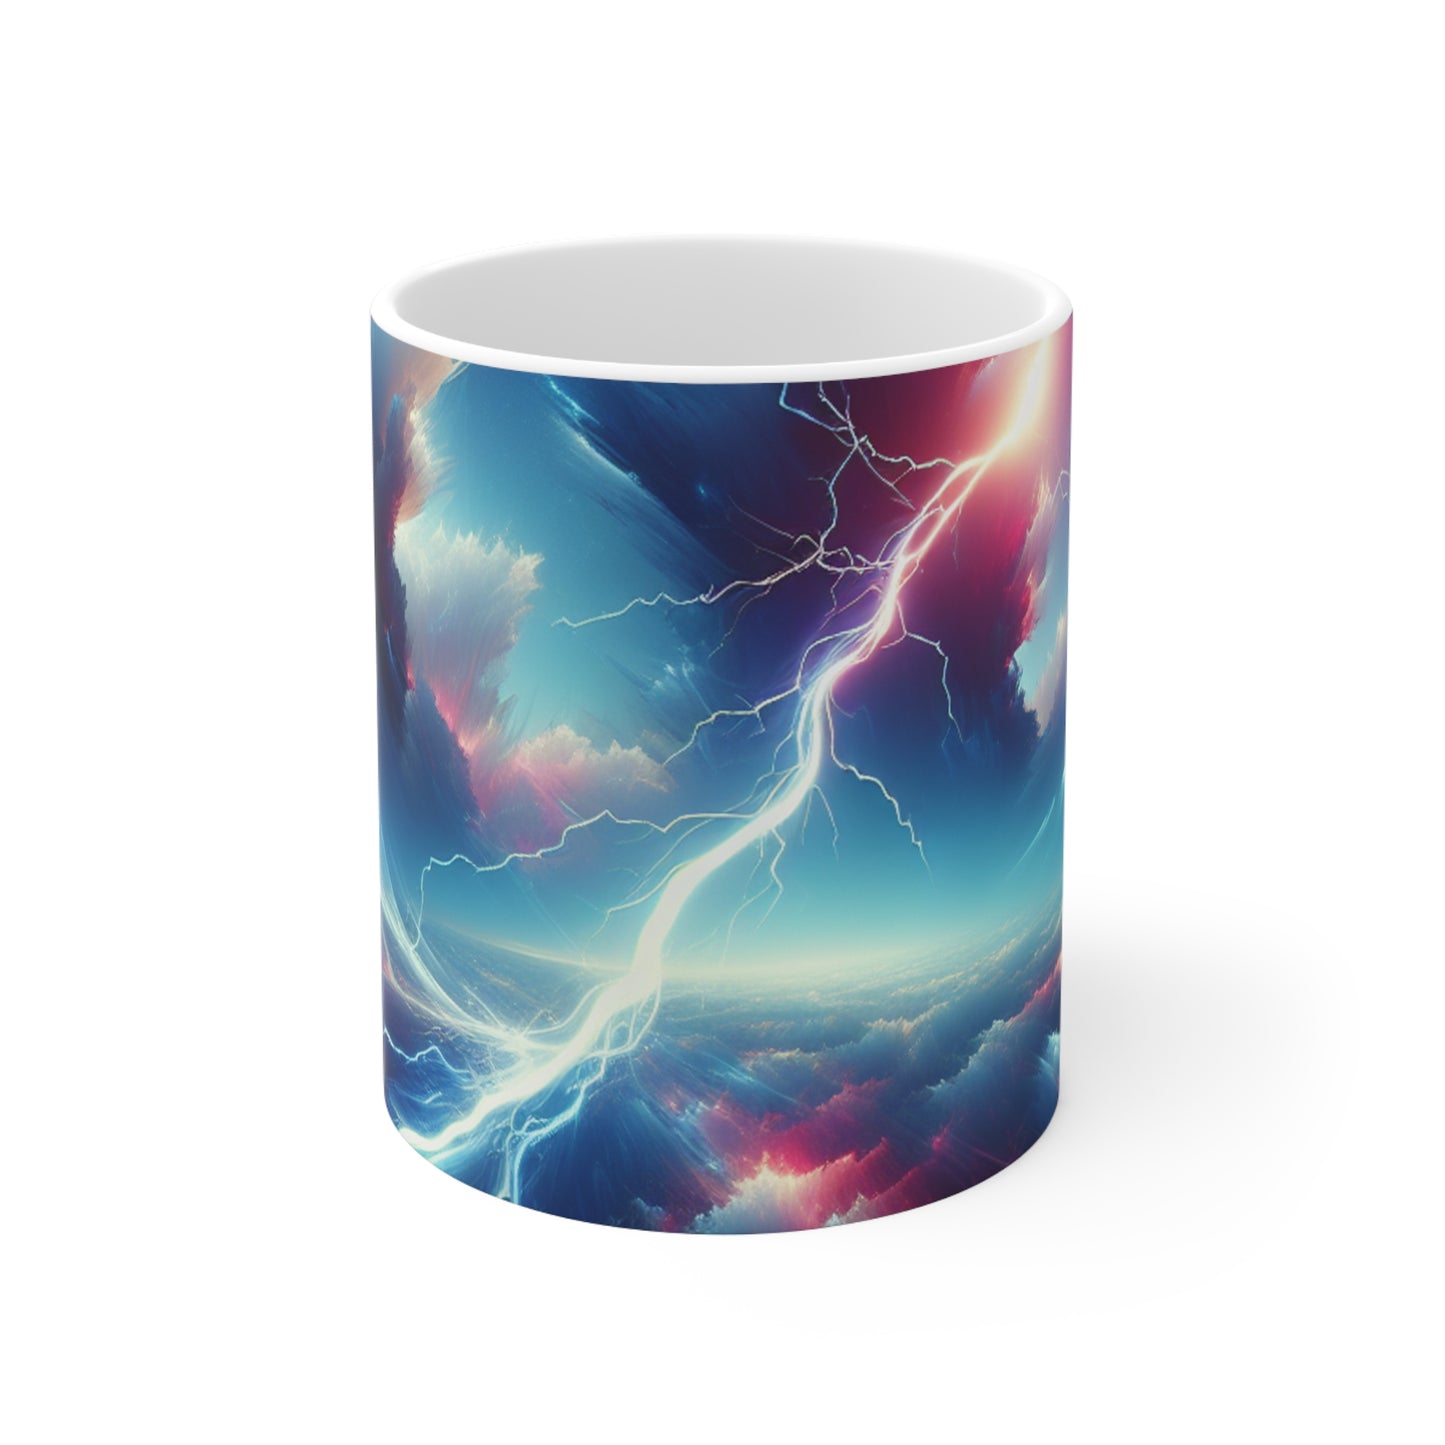 "Electricity In The Sky" - The Alien Ceramic Mug 11oz Digital Art Style